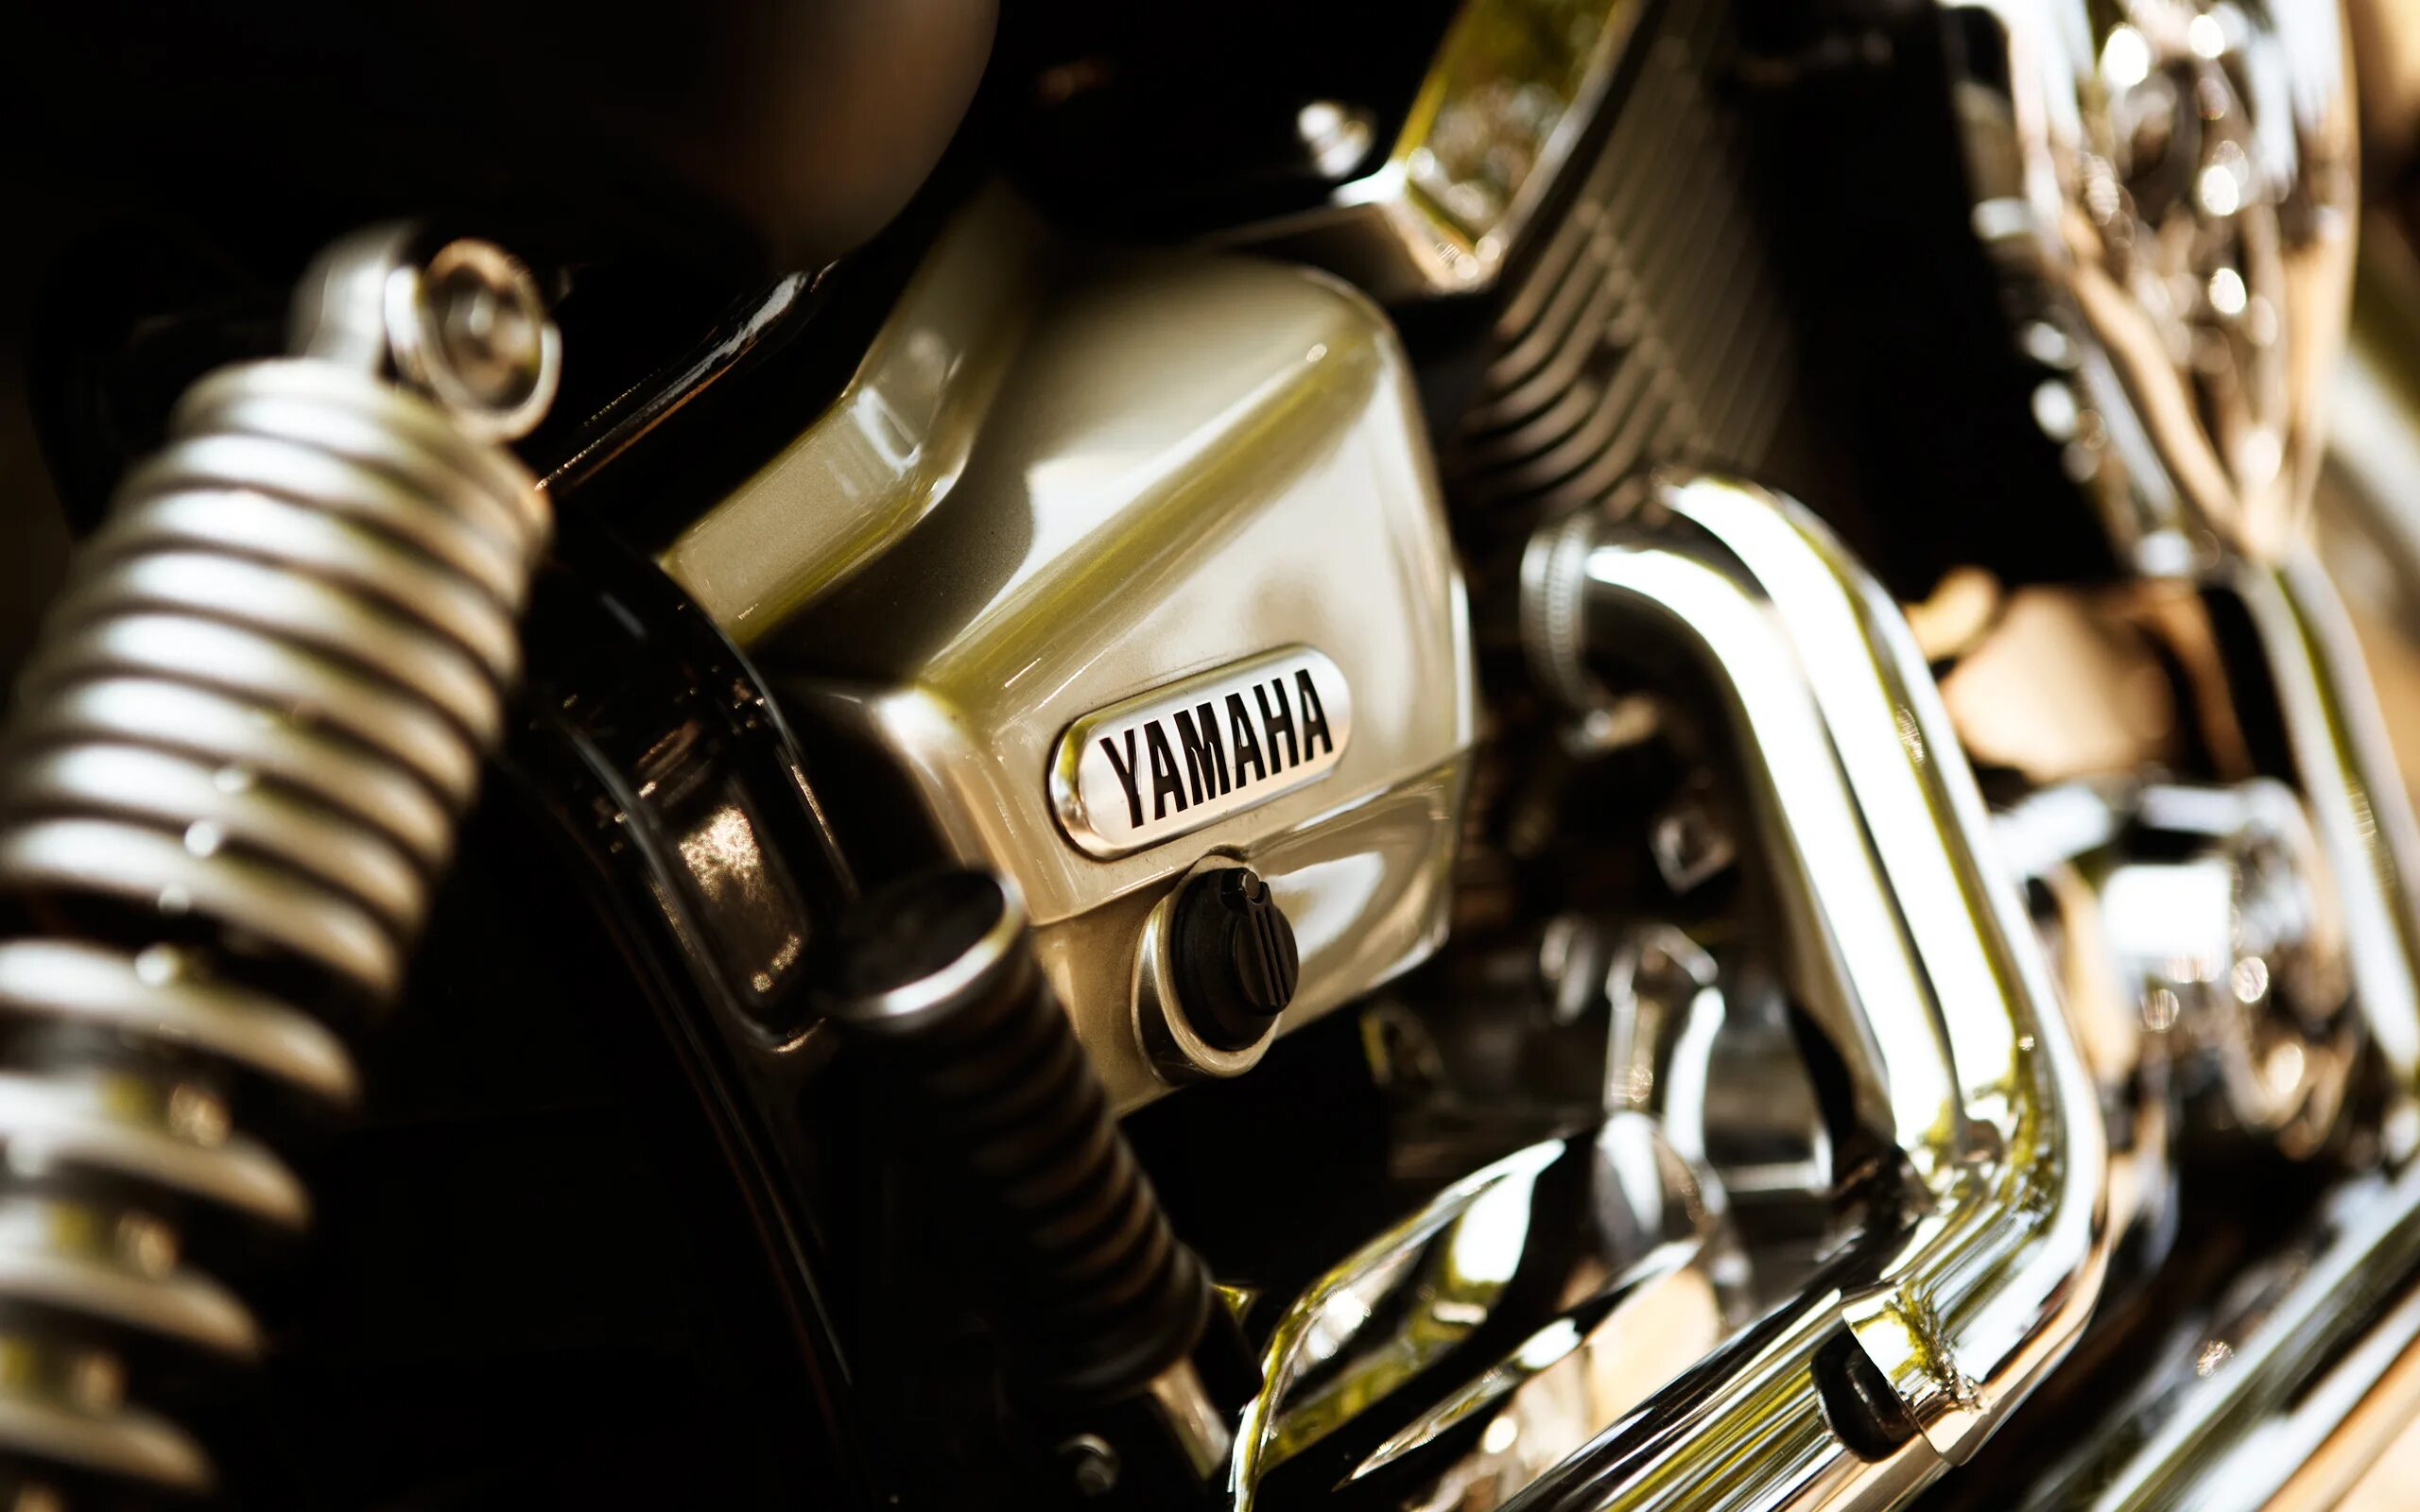 Wallpaper engine wallpapers download. Двигатели мотоциклов Ямаха. Мотоцикл Yamaha engine. Хромированные детали мотоцикла. Двигатель обои.